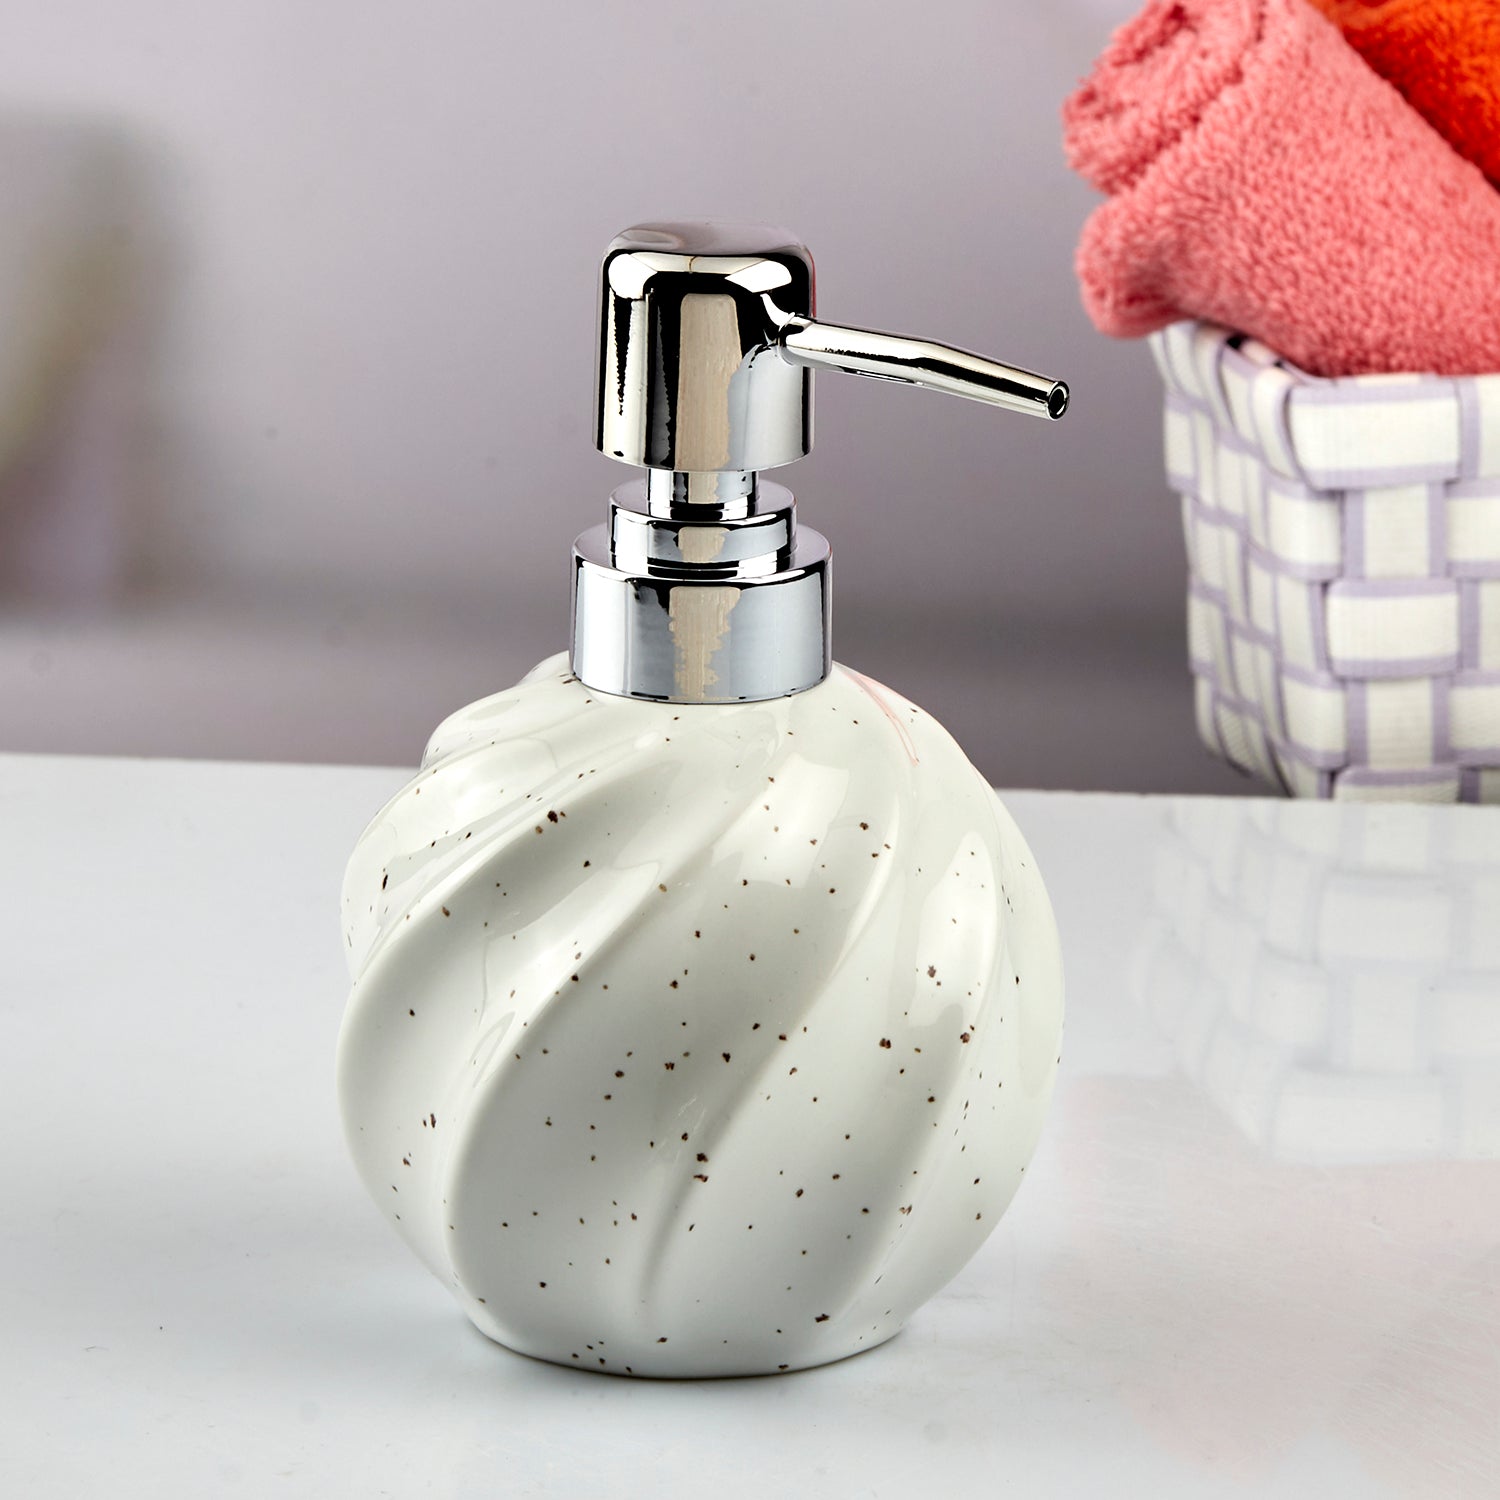 Ceramic Soap Dispenser liquid handwash pump for Bathroom, Set of 1, Black (10742)